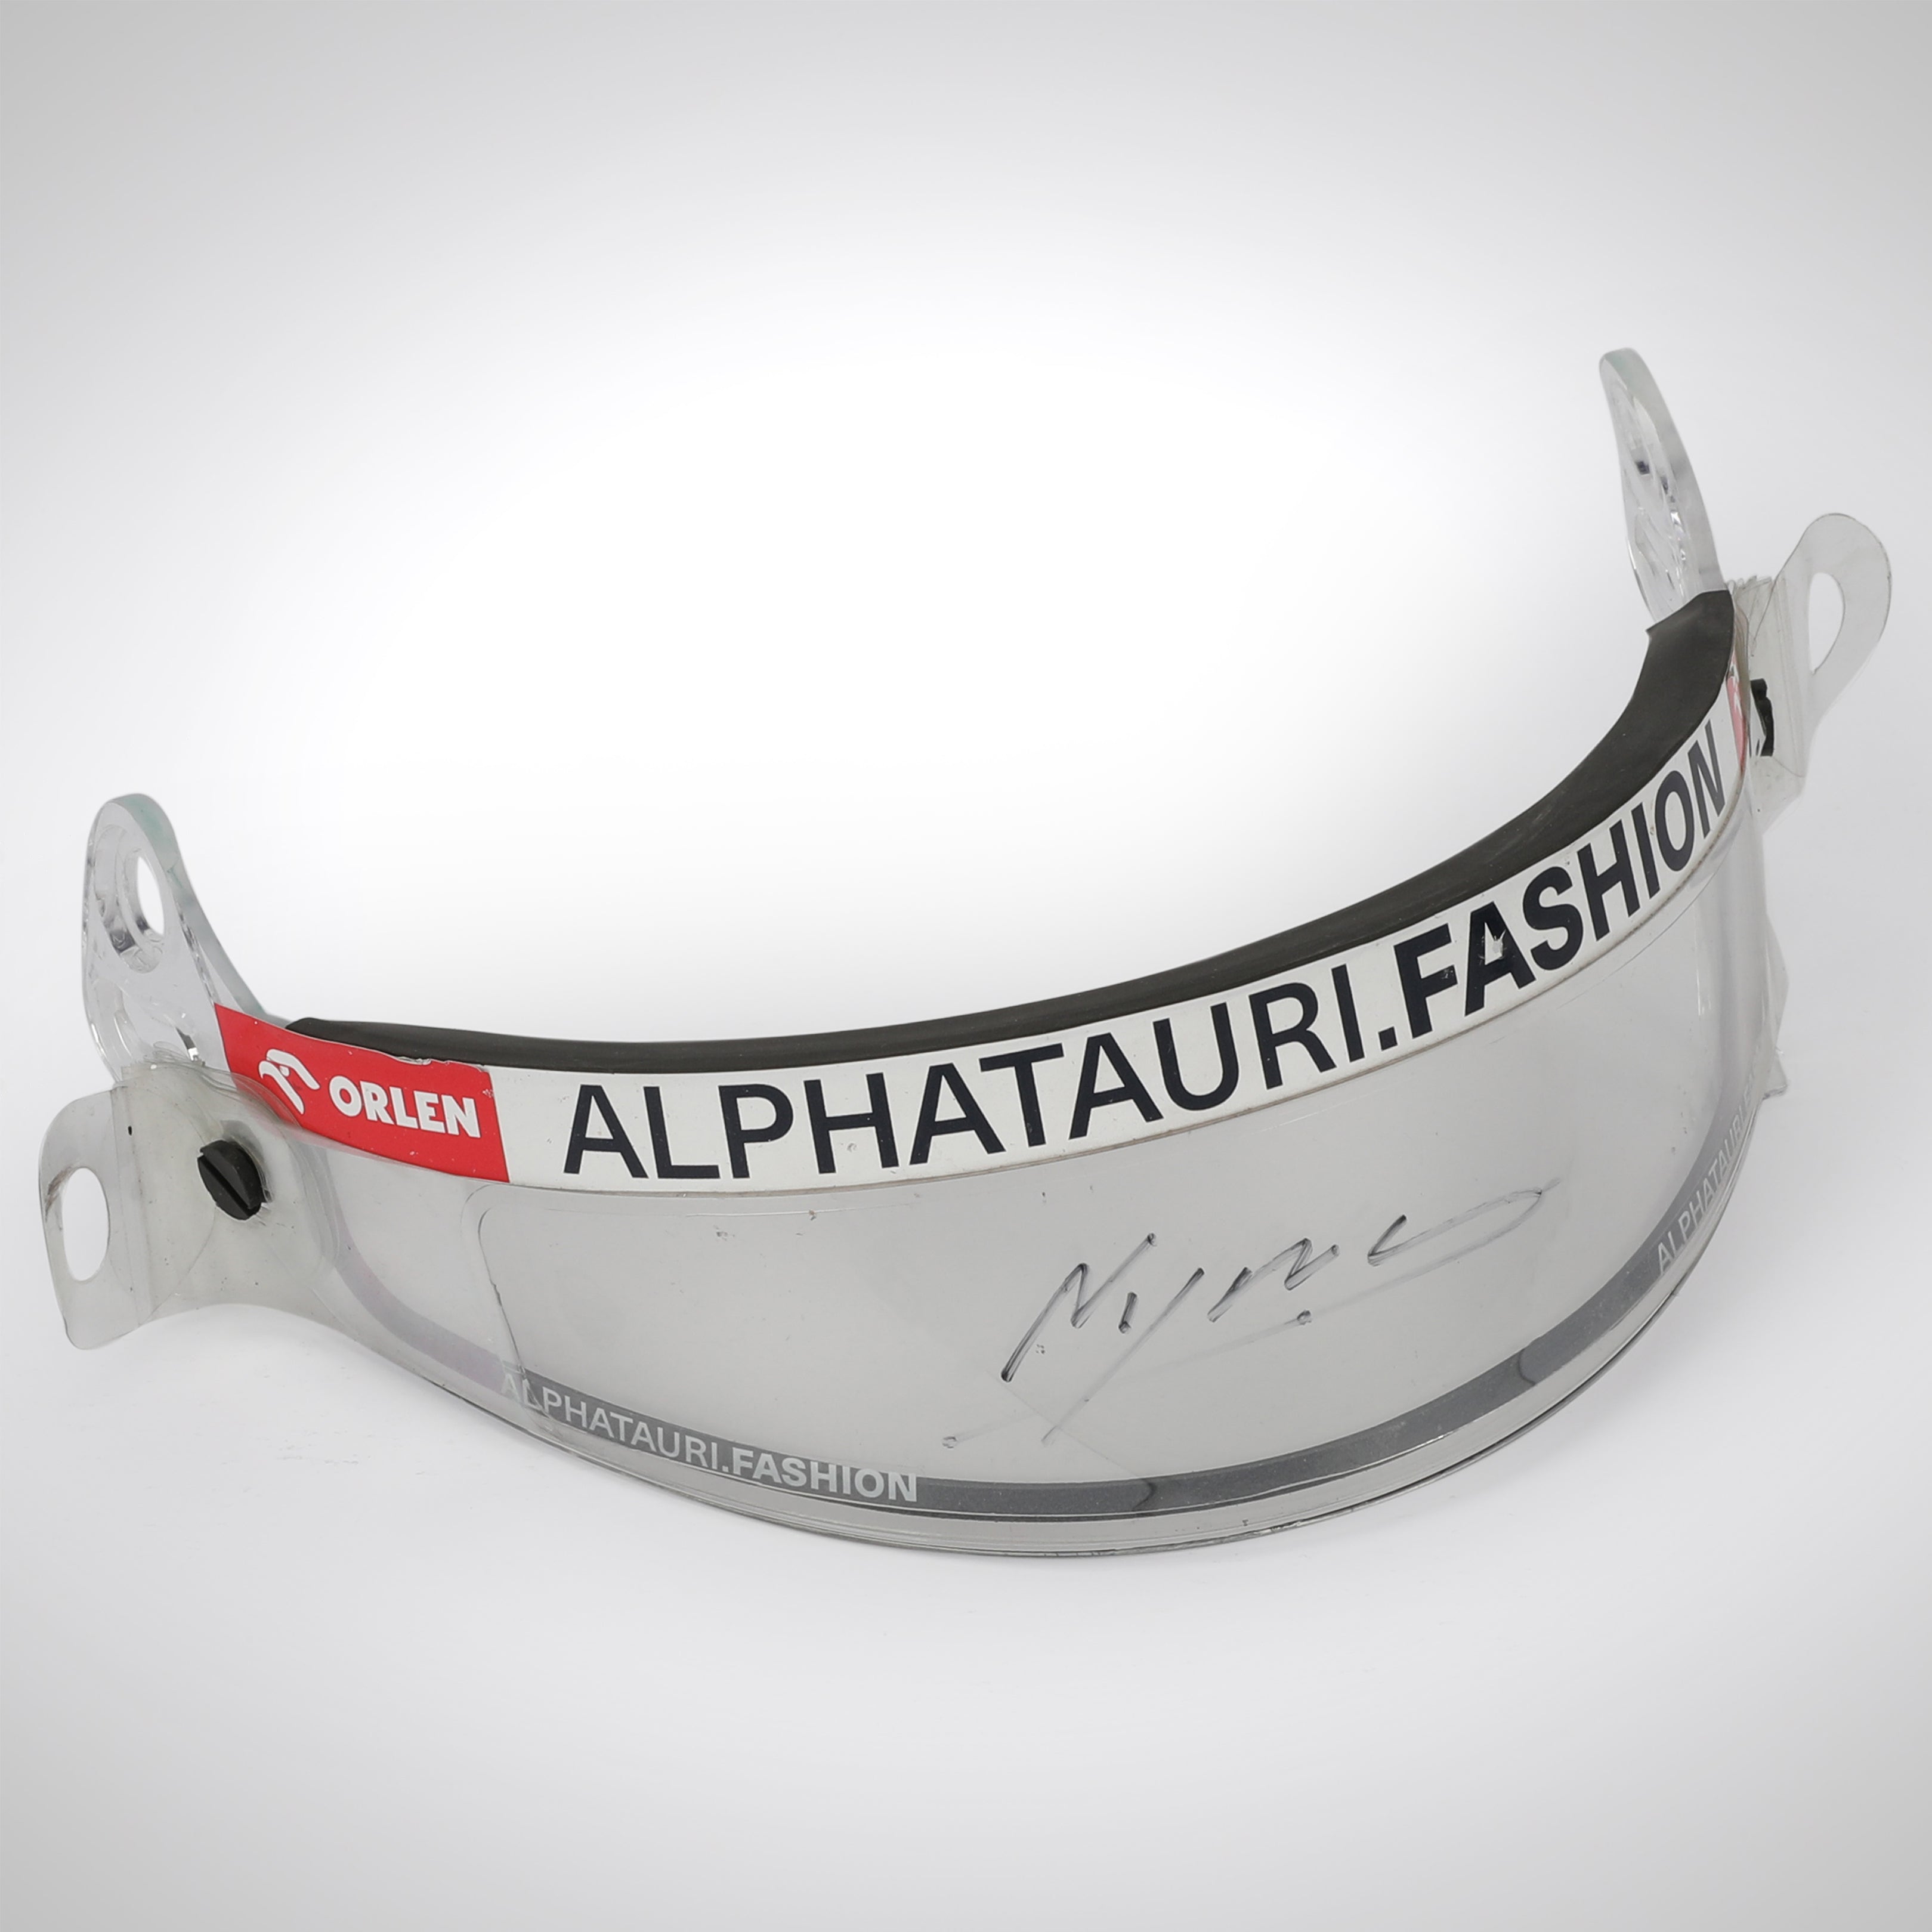 AlphaTauri F1® Merchandise | AlphaTauri F1® Team Memorabilia | F1 